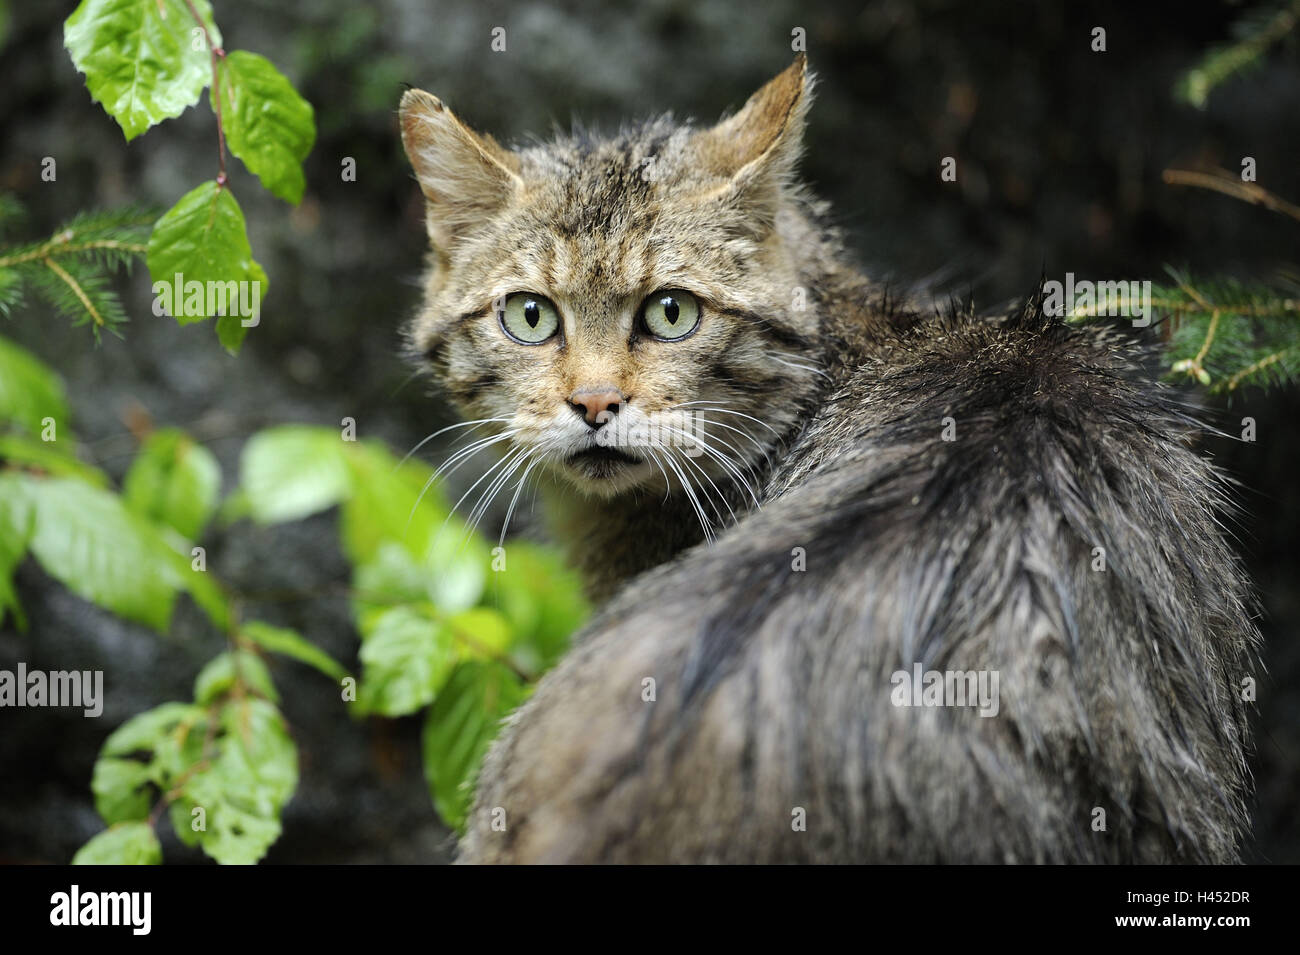 Wildcat, Felis silvestris, Stock Photo